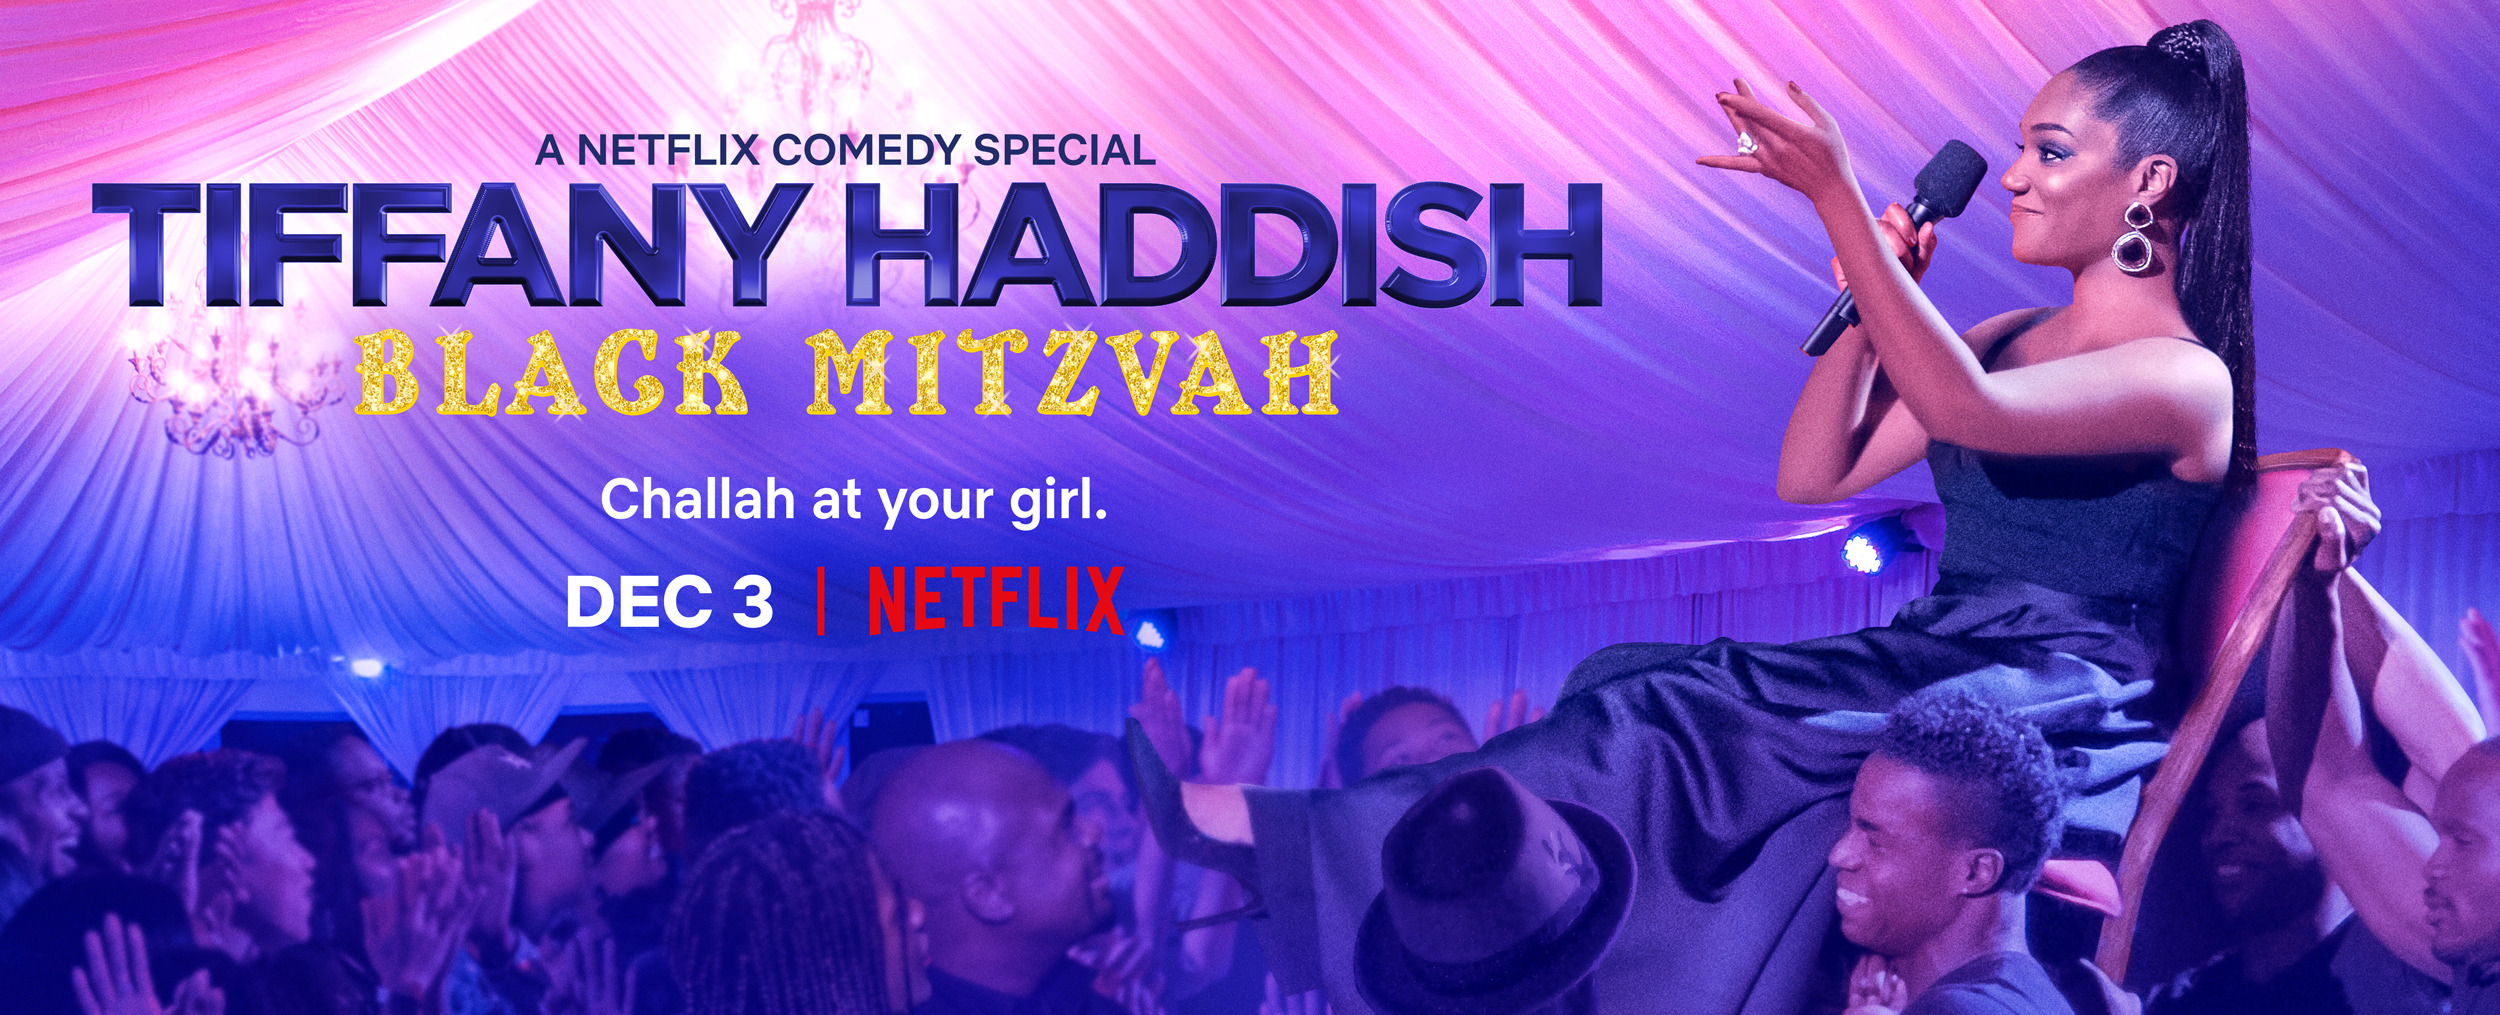 Mega Sized TV Poster Image for Tiffany Haddish: Black Mitzvah 